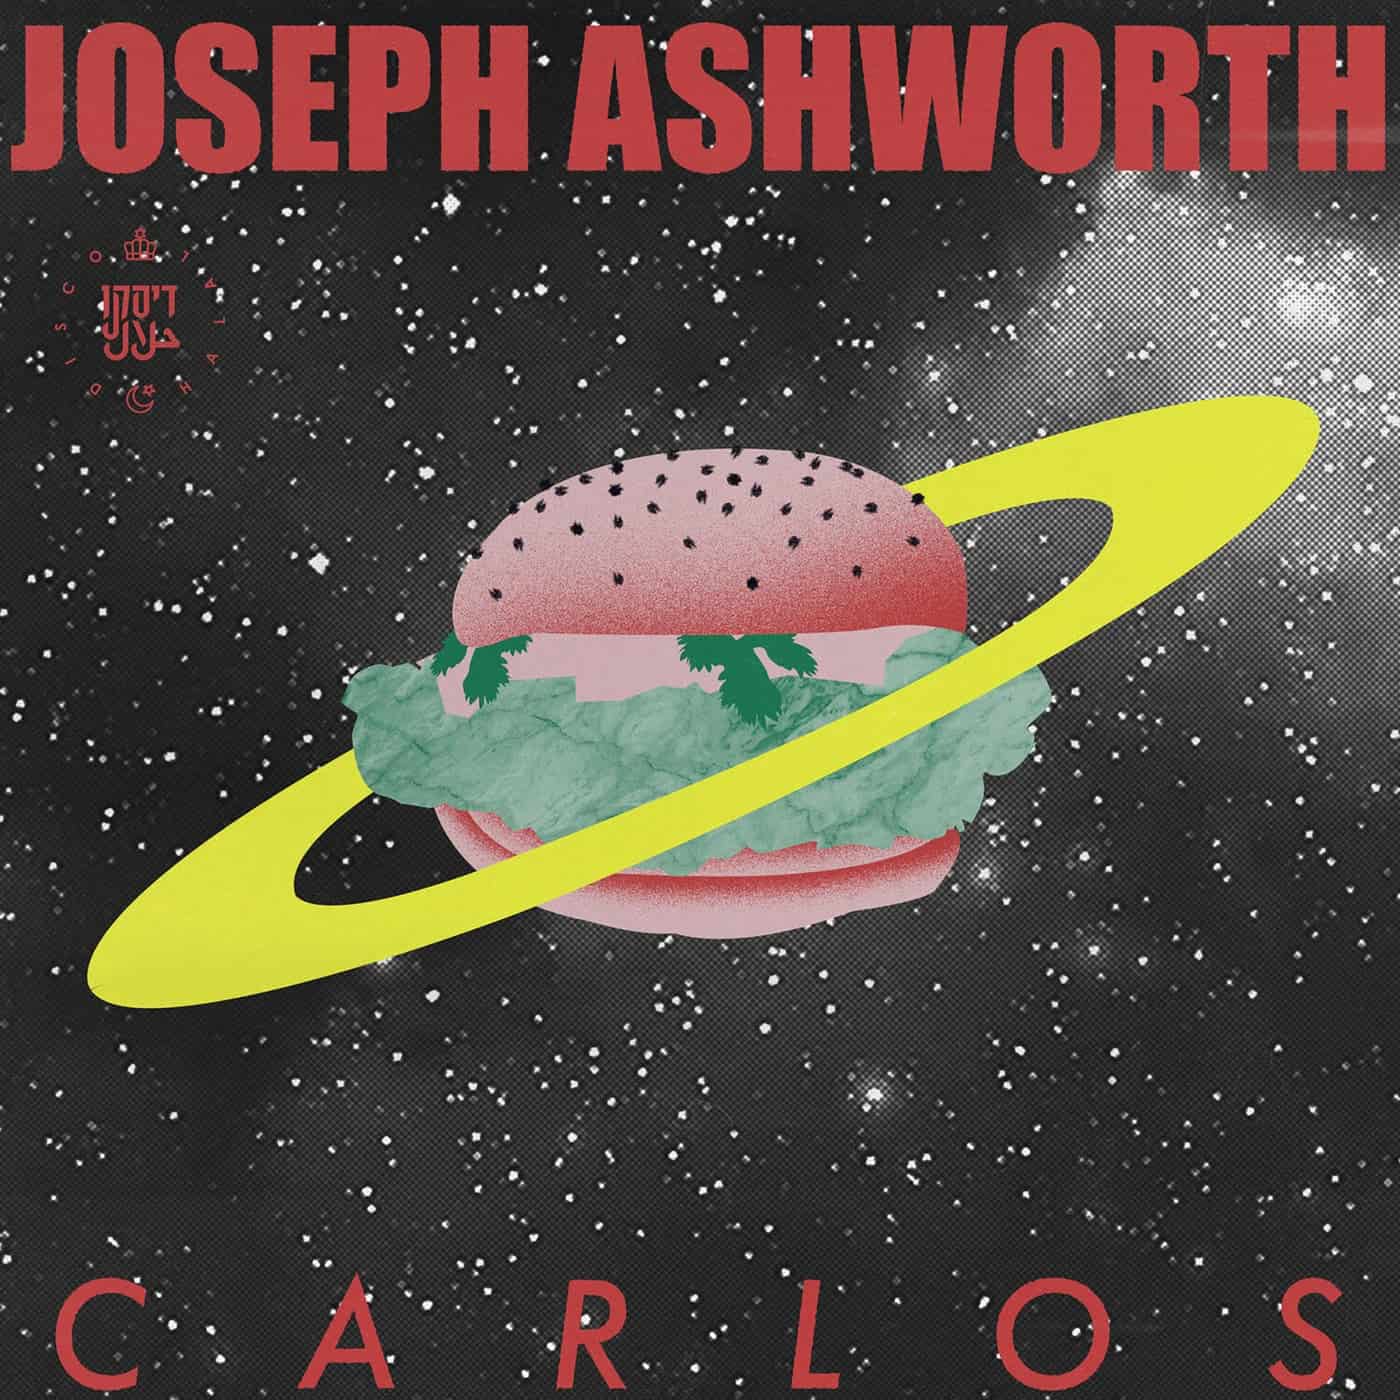 Download Joseph Ashworth - Carlos on Electrobuzz